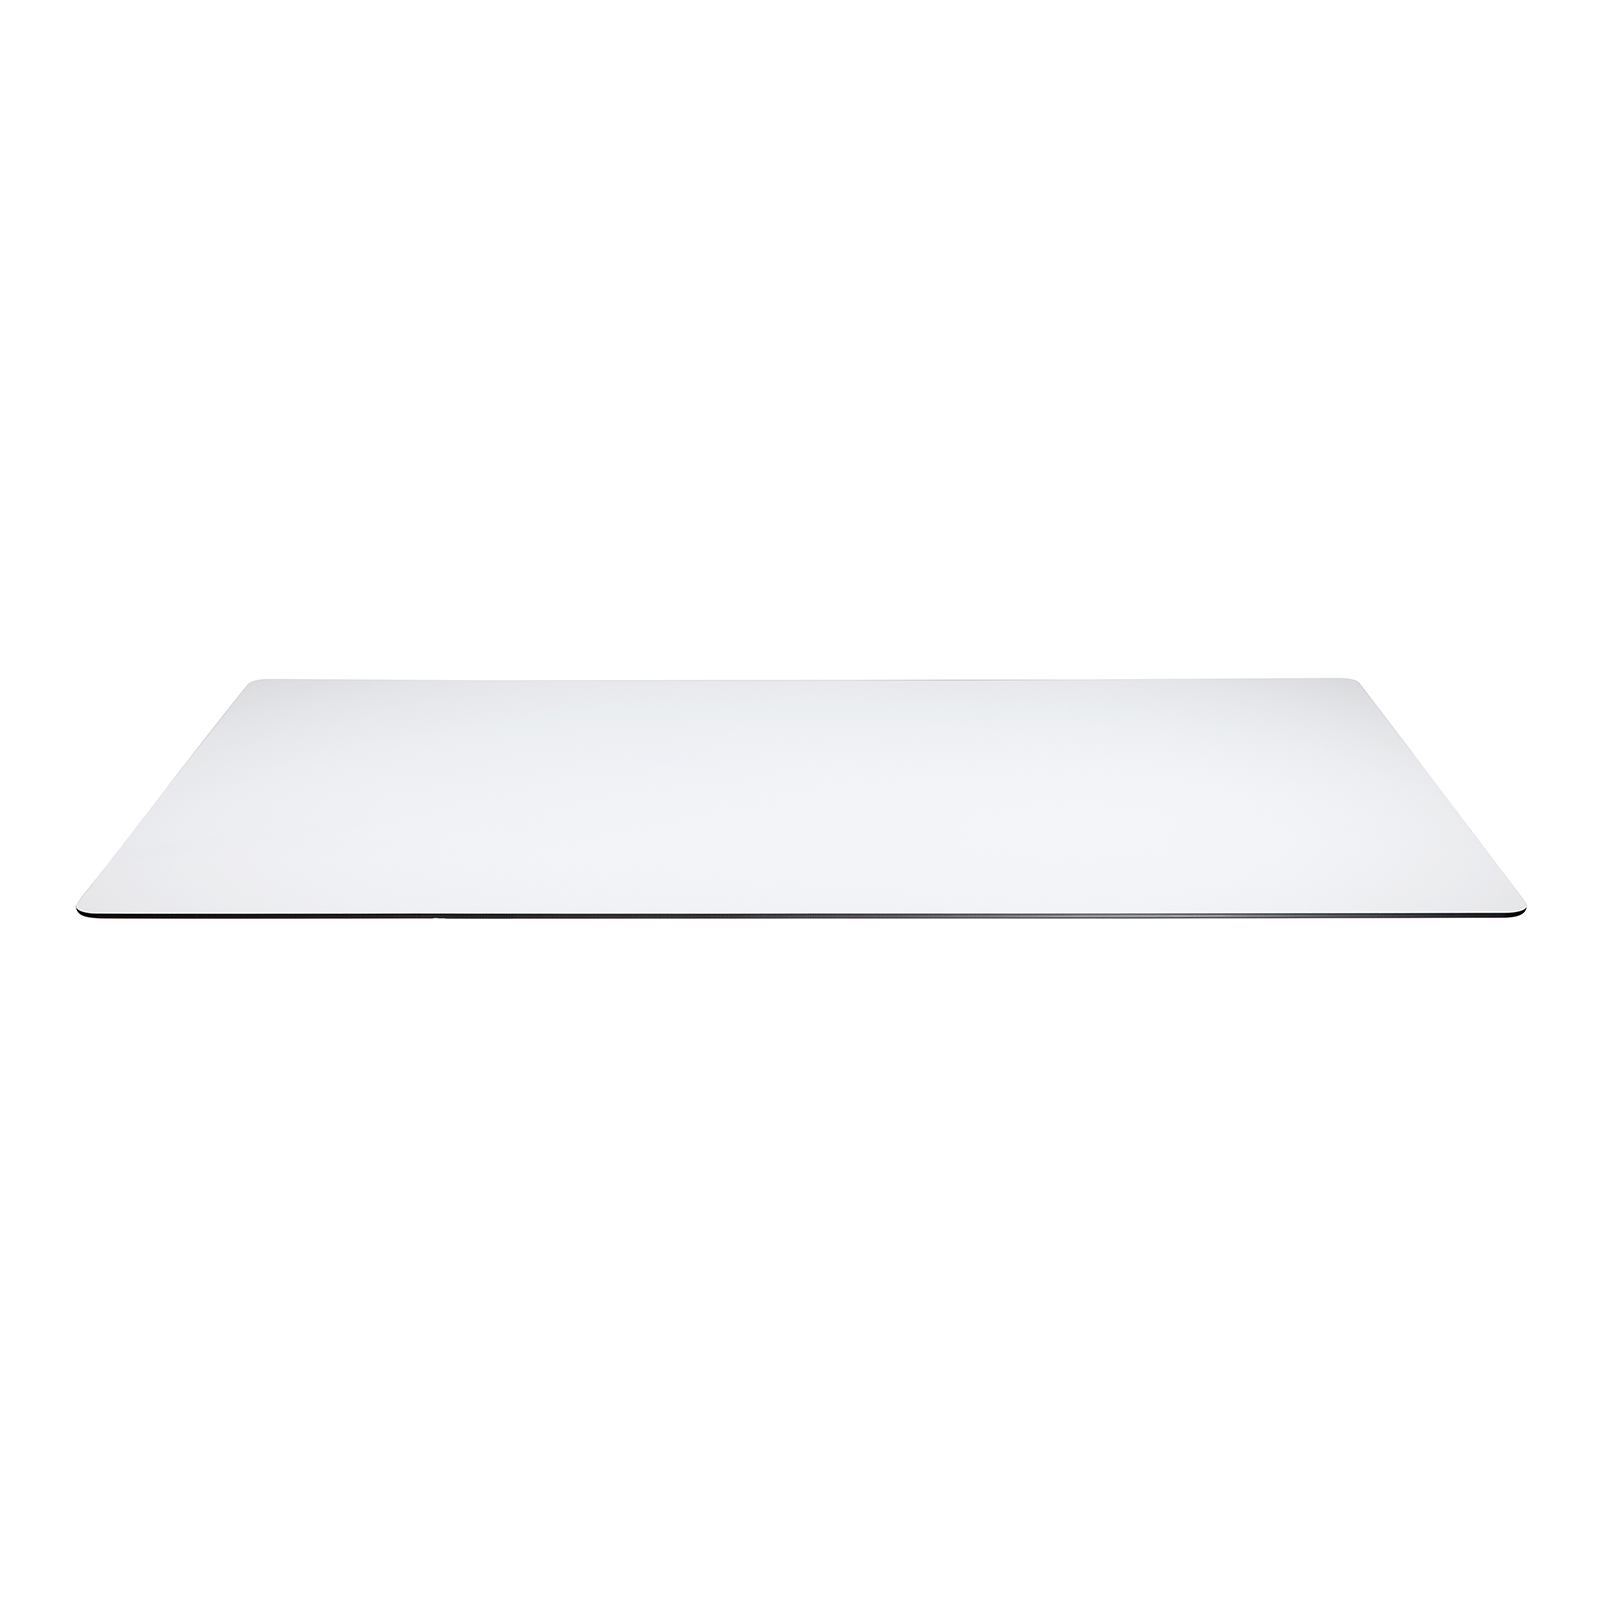 Table top 110x69cm, white